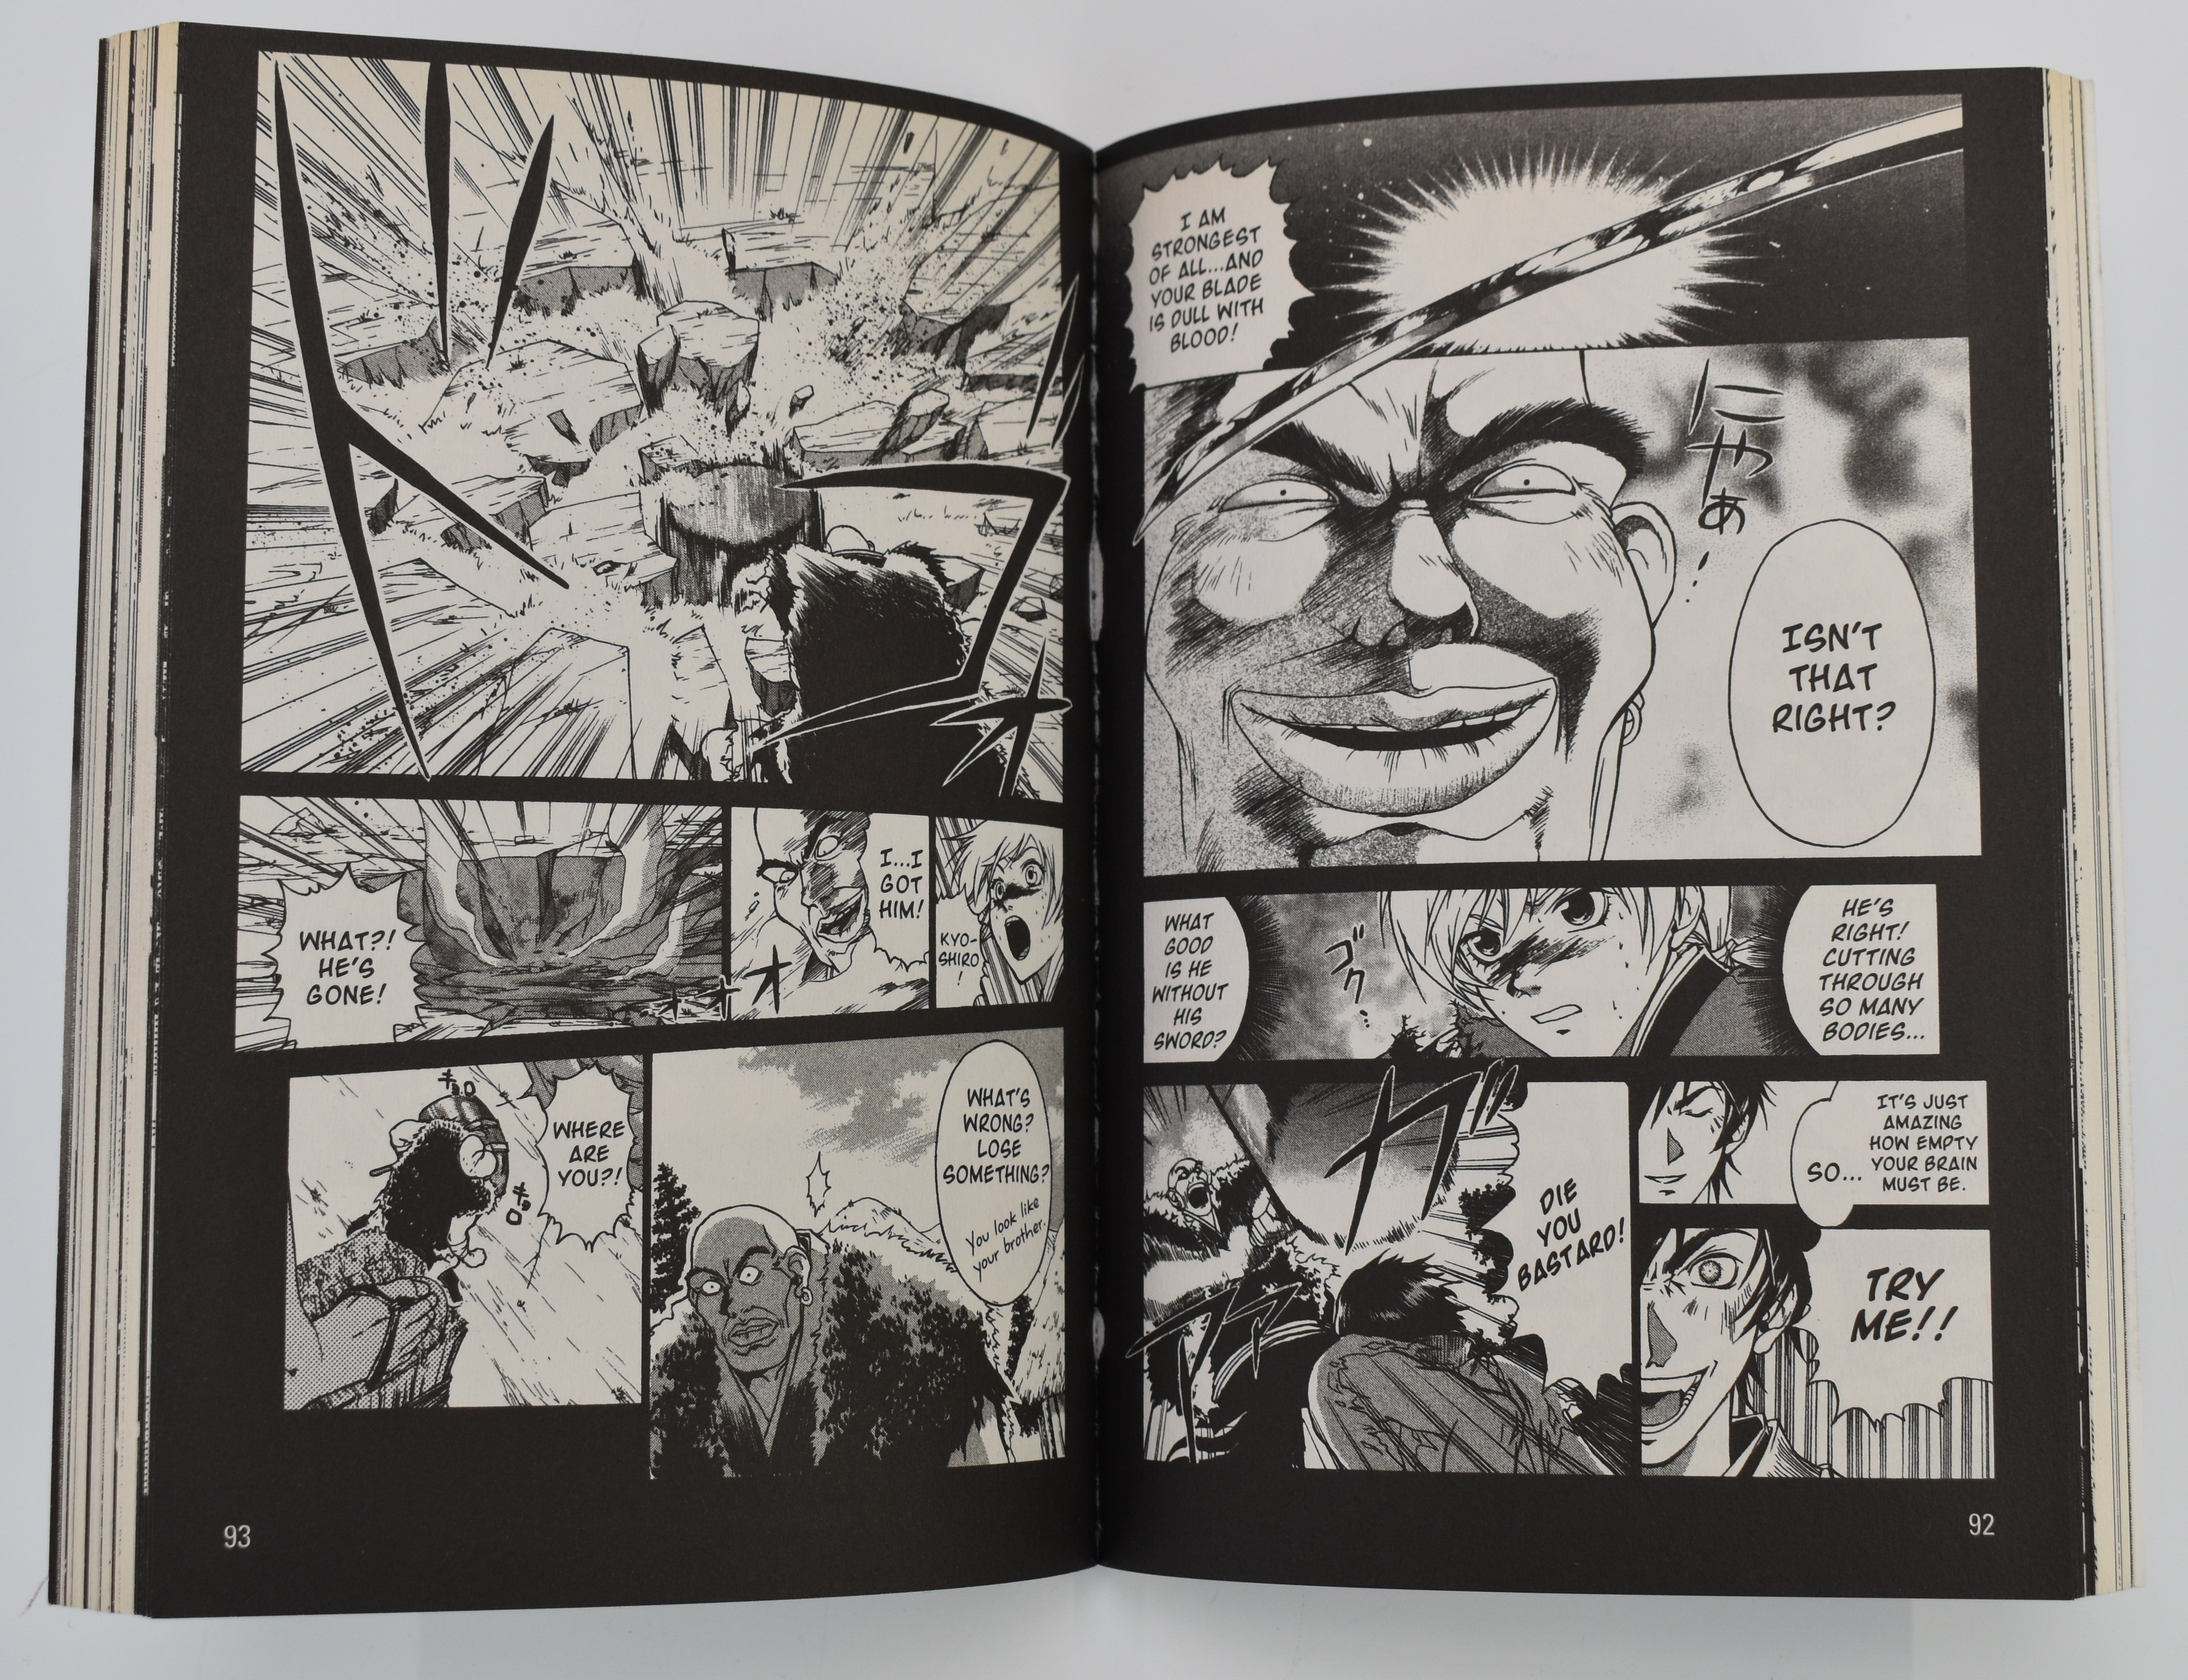 Samurai Deeper Kyo Manga comic book volumes 1-38 by Akimine Kamijyo published by Del Rey. - Image 6 of 6